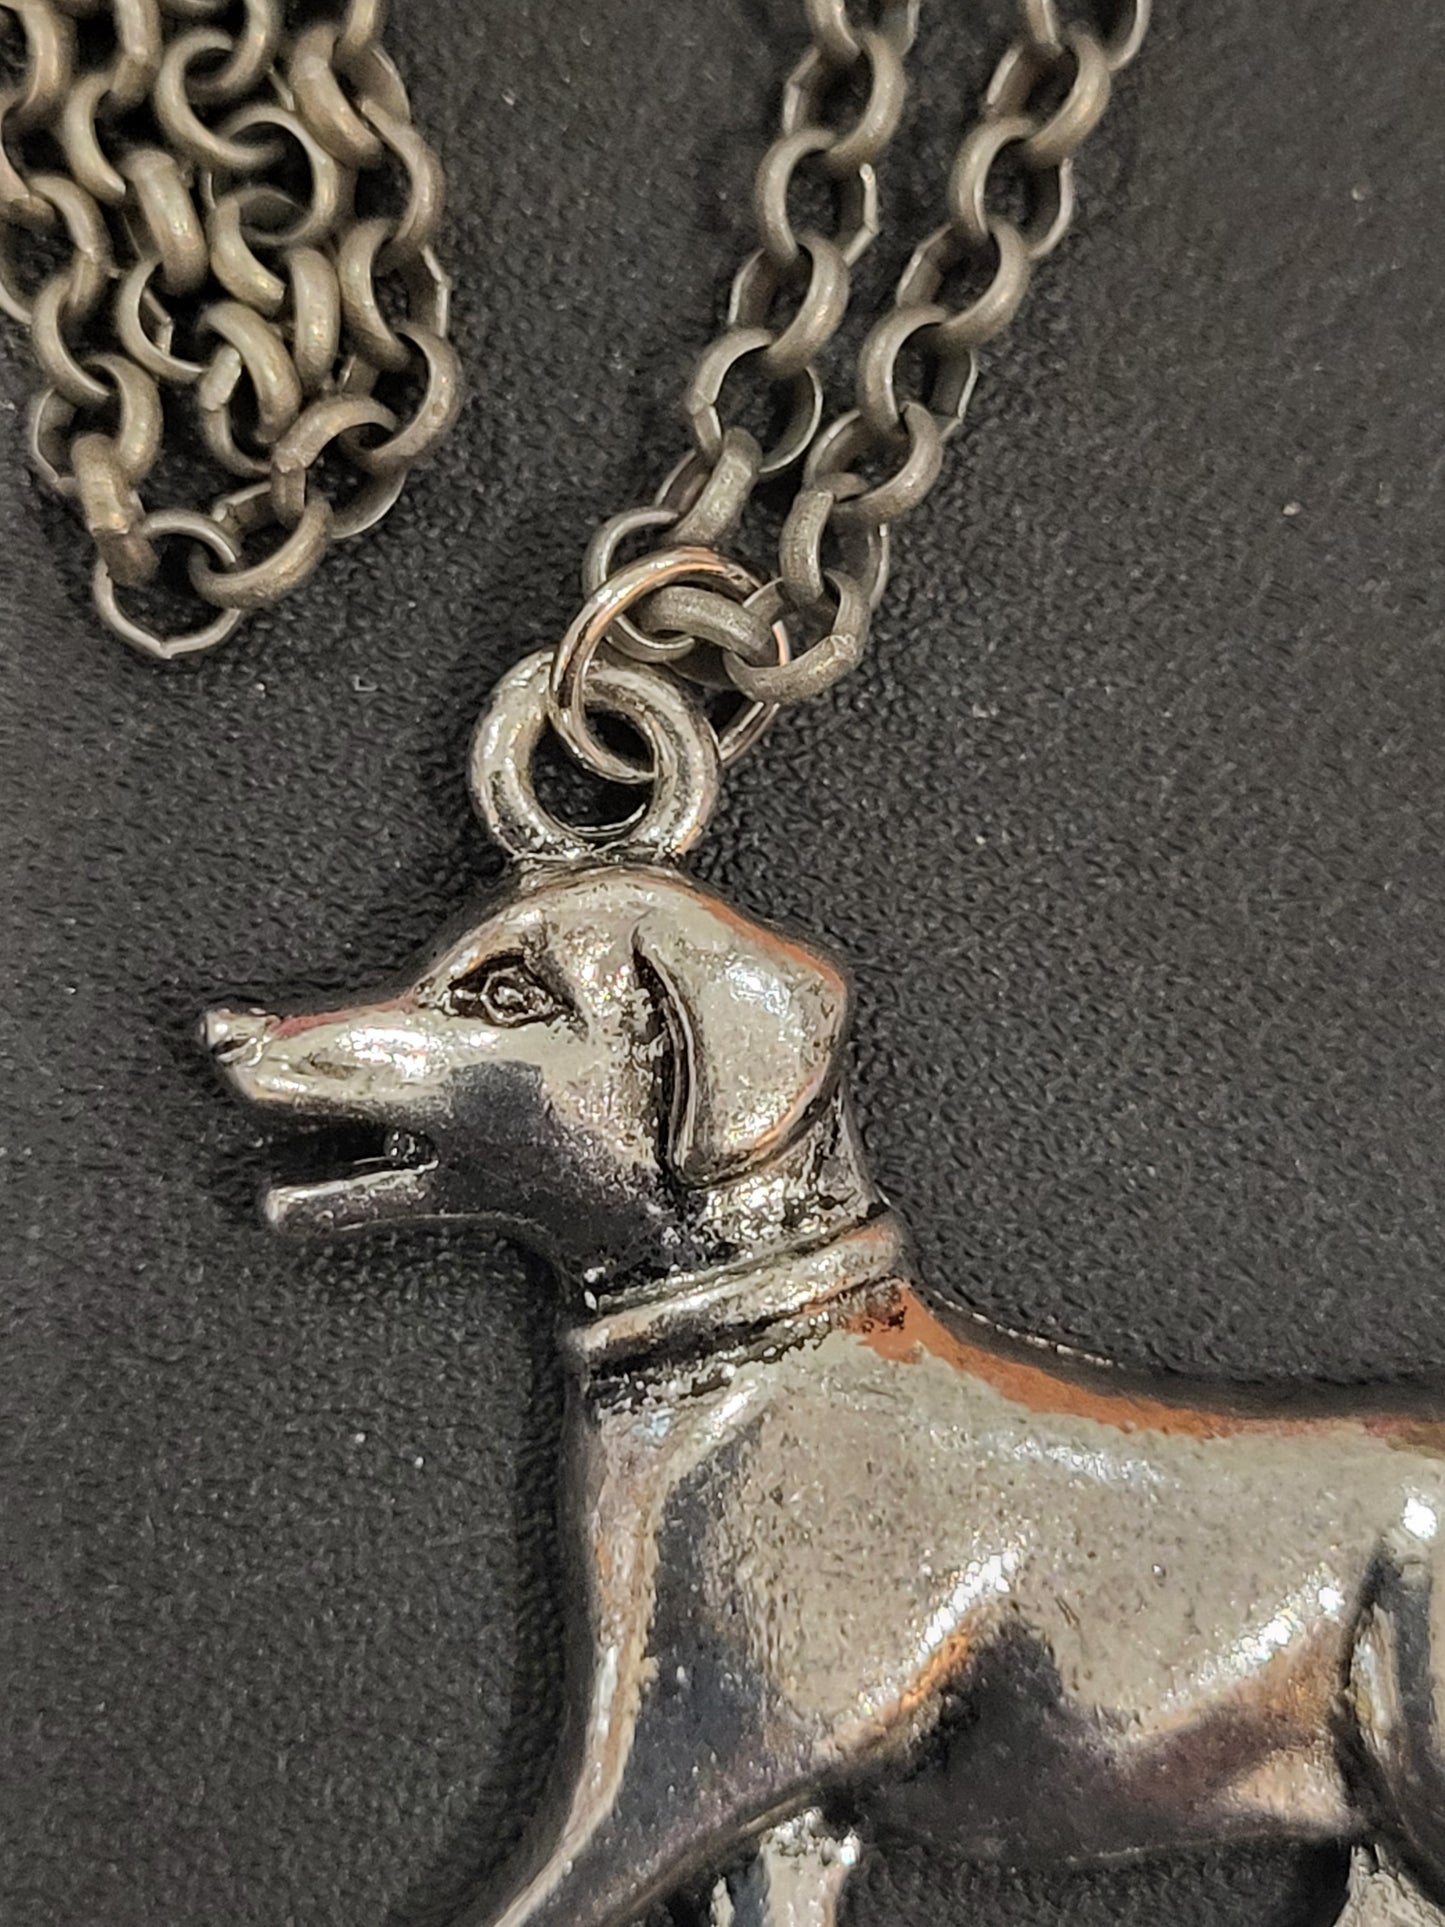 Handmade pewter dog charm necklace